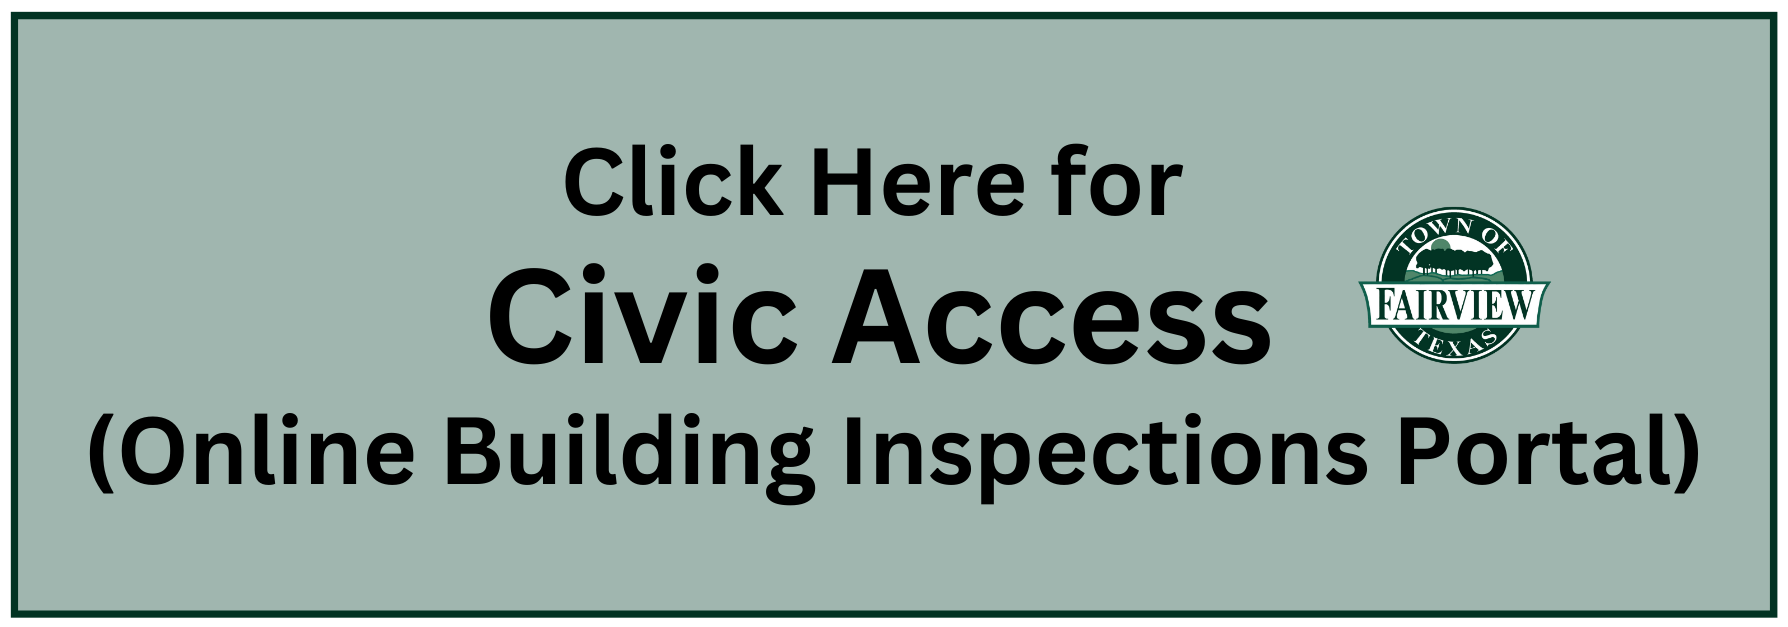 Civic Access v2